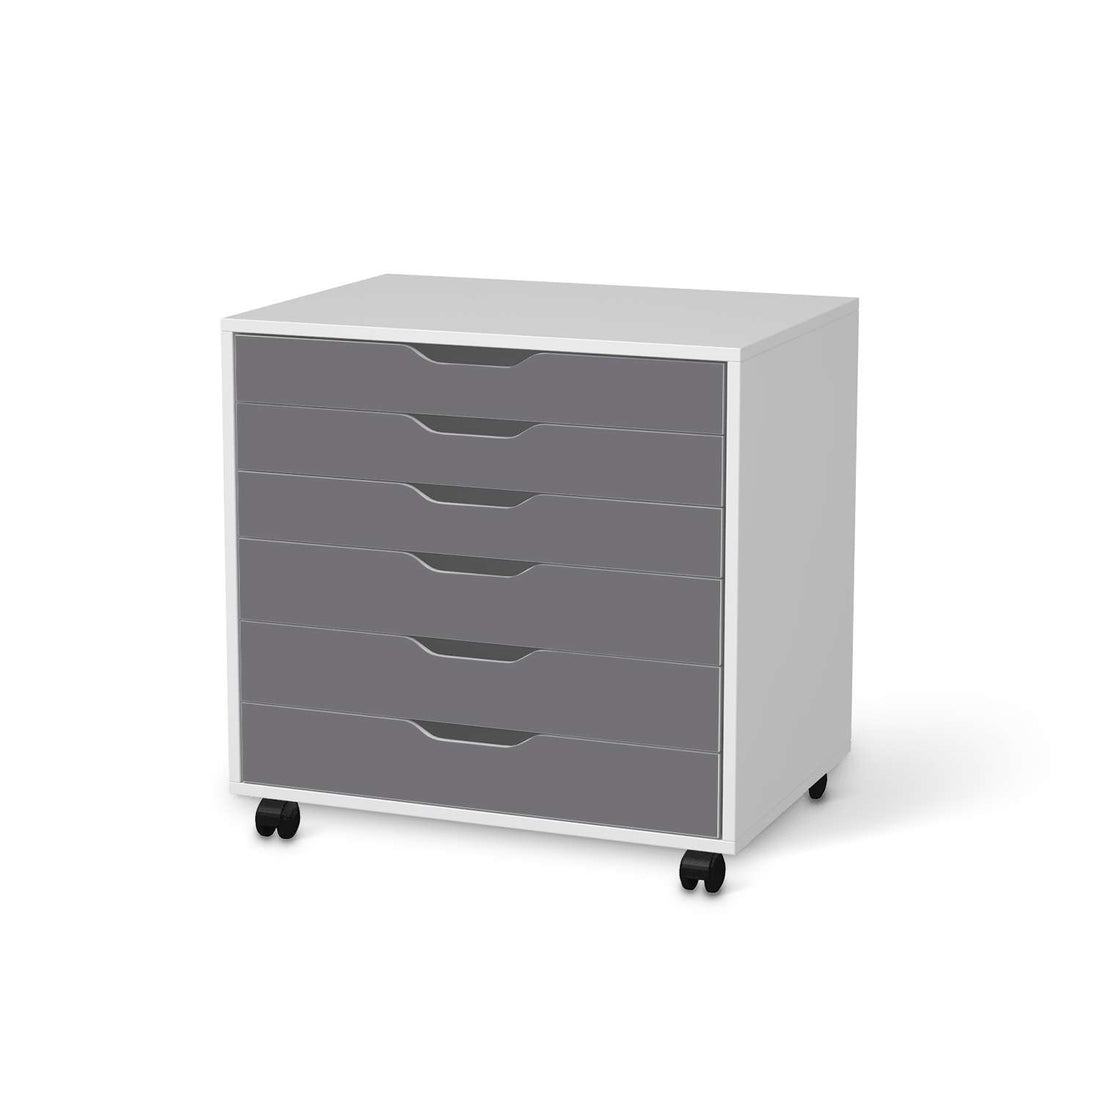 Möbelfolie Grau Light - IKEA Alex Rollcontainer 6 Schubladen - weiss